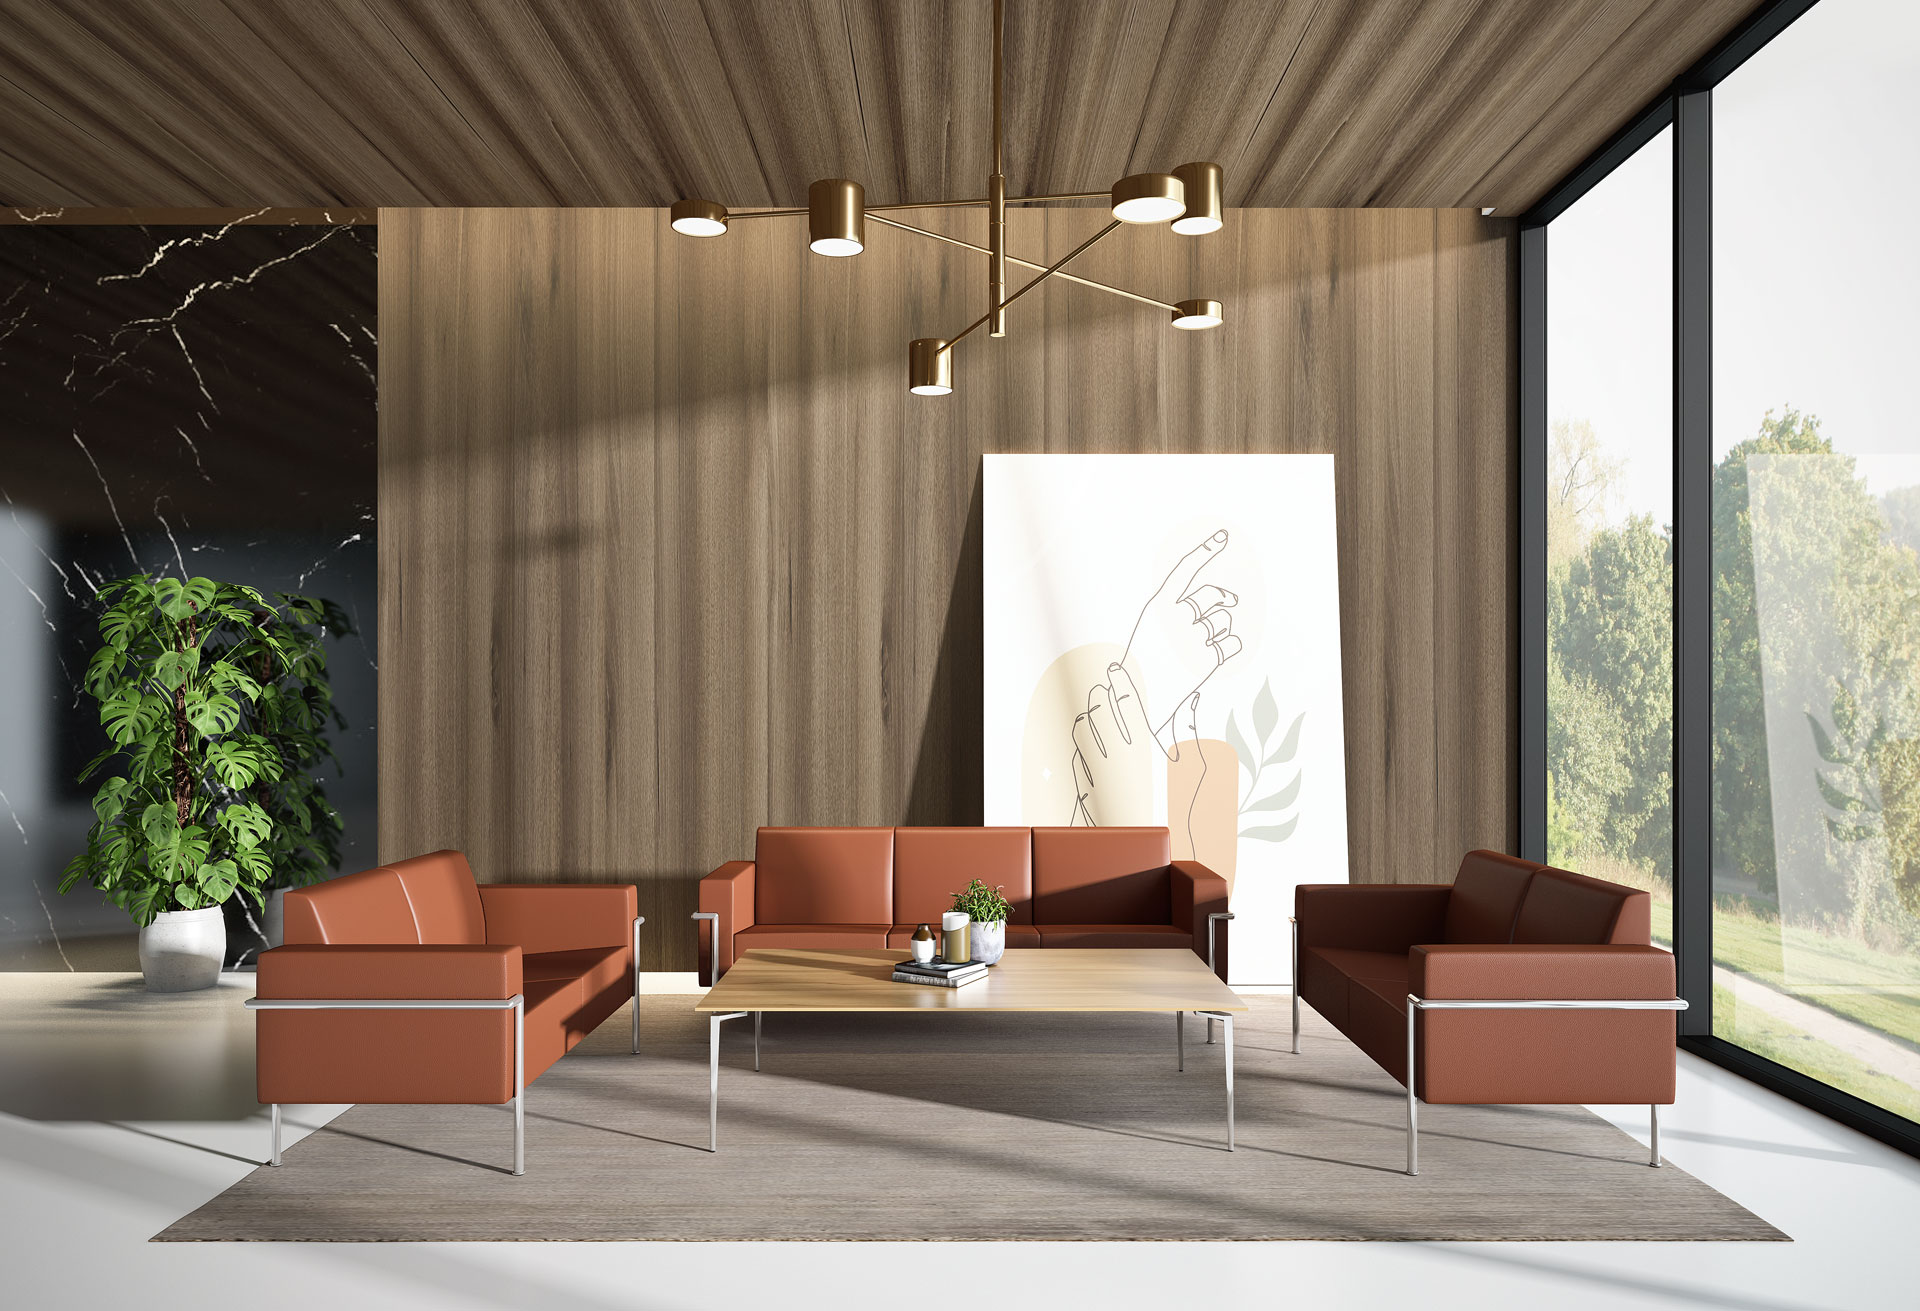 Virtu lowback sofa in brown leather